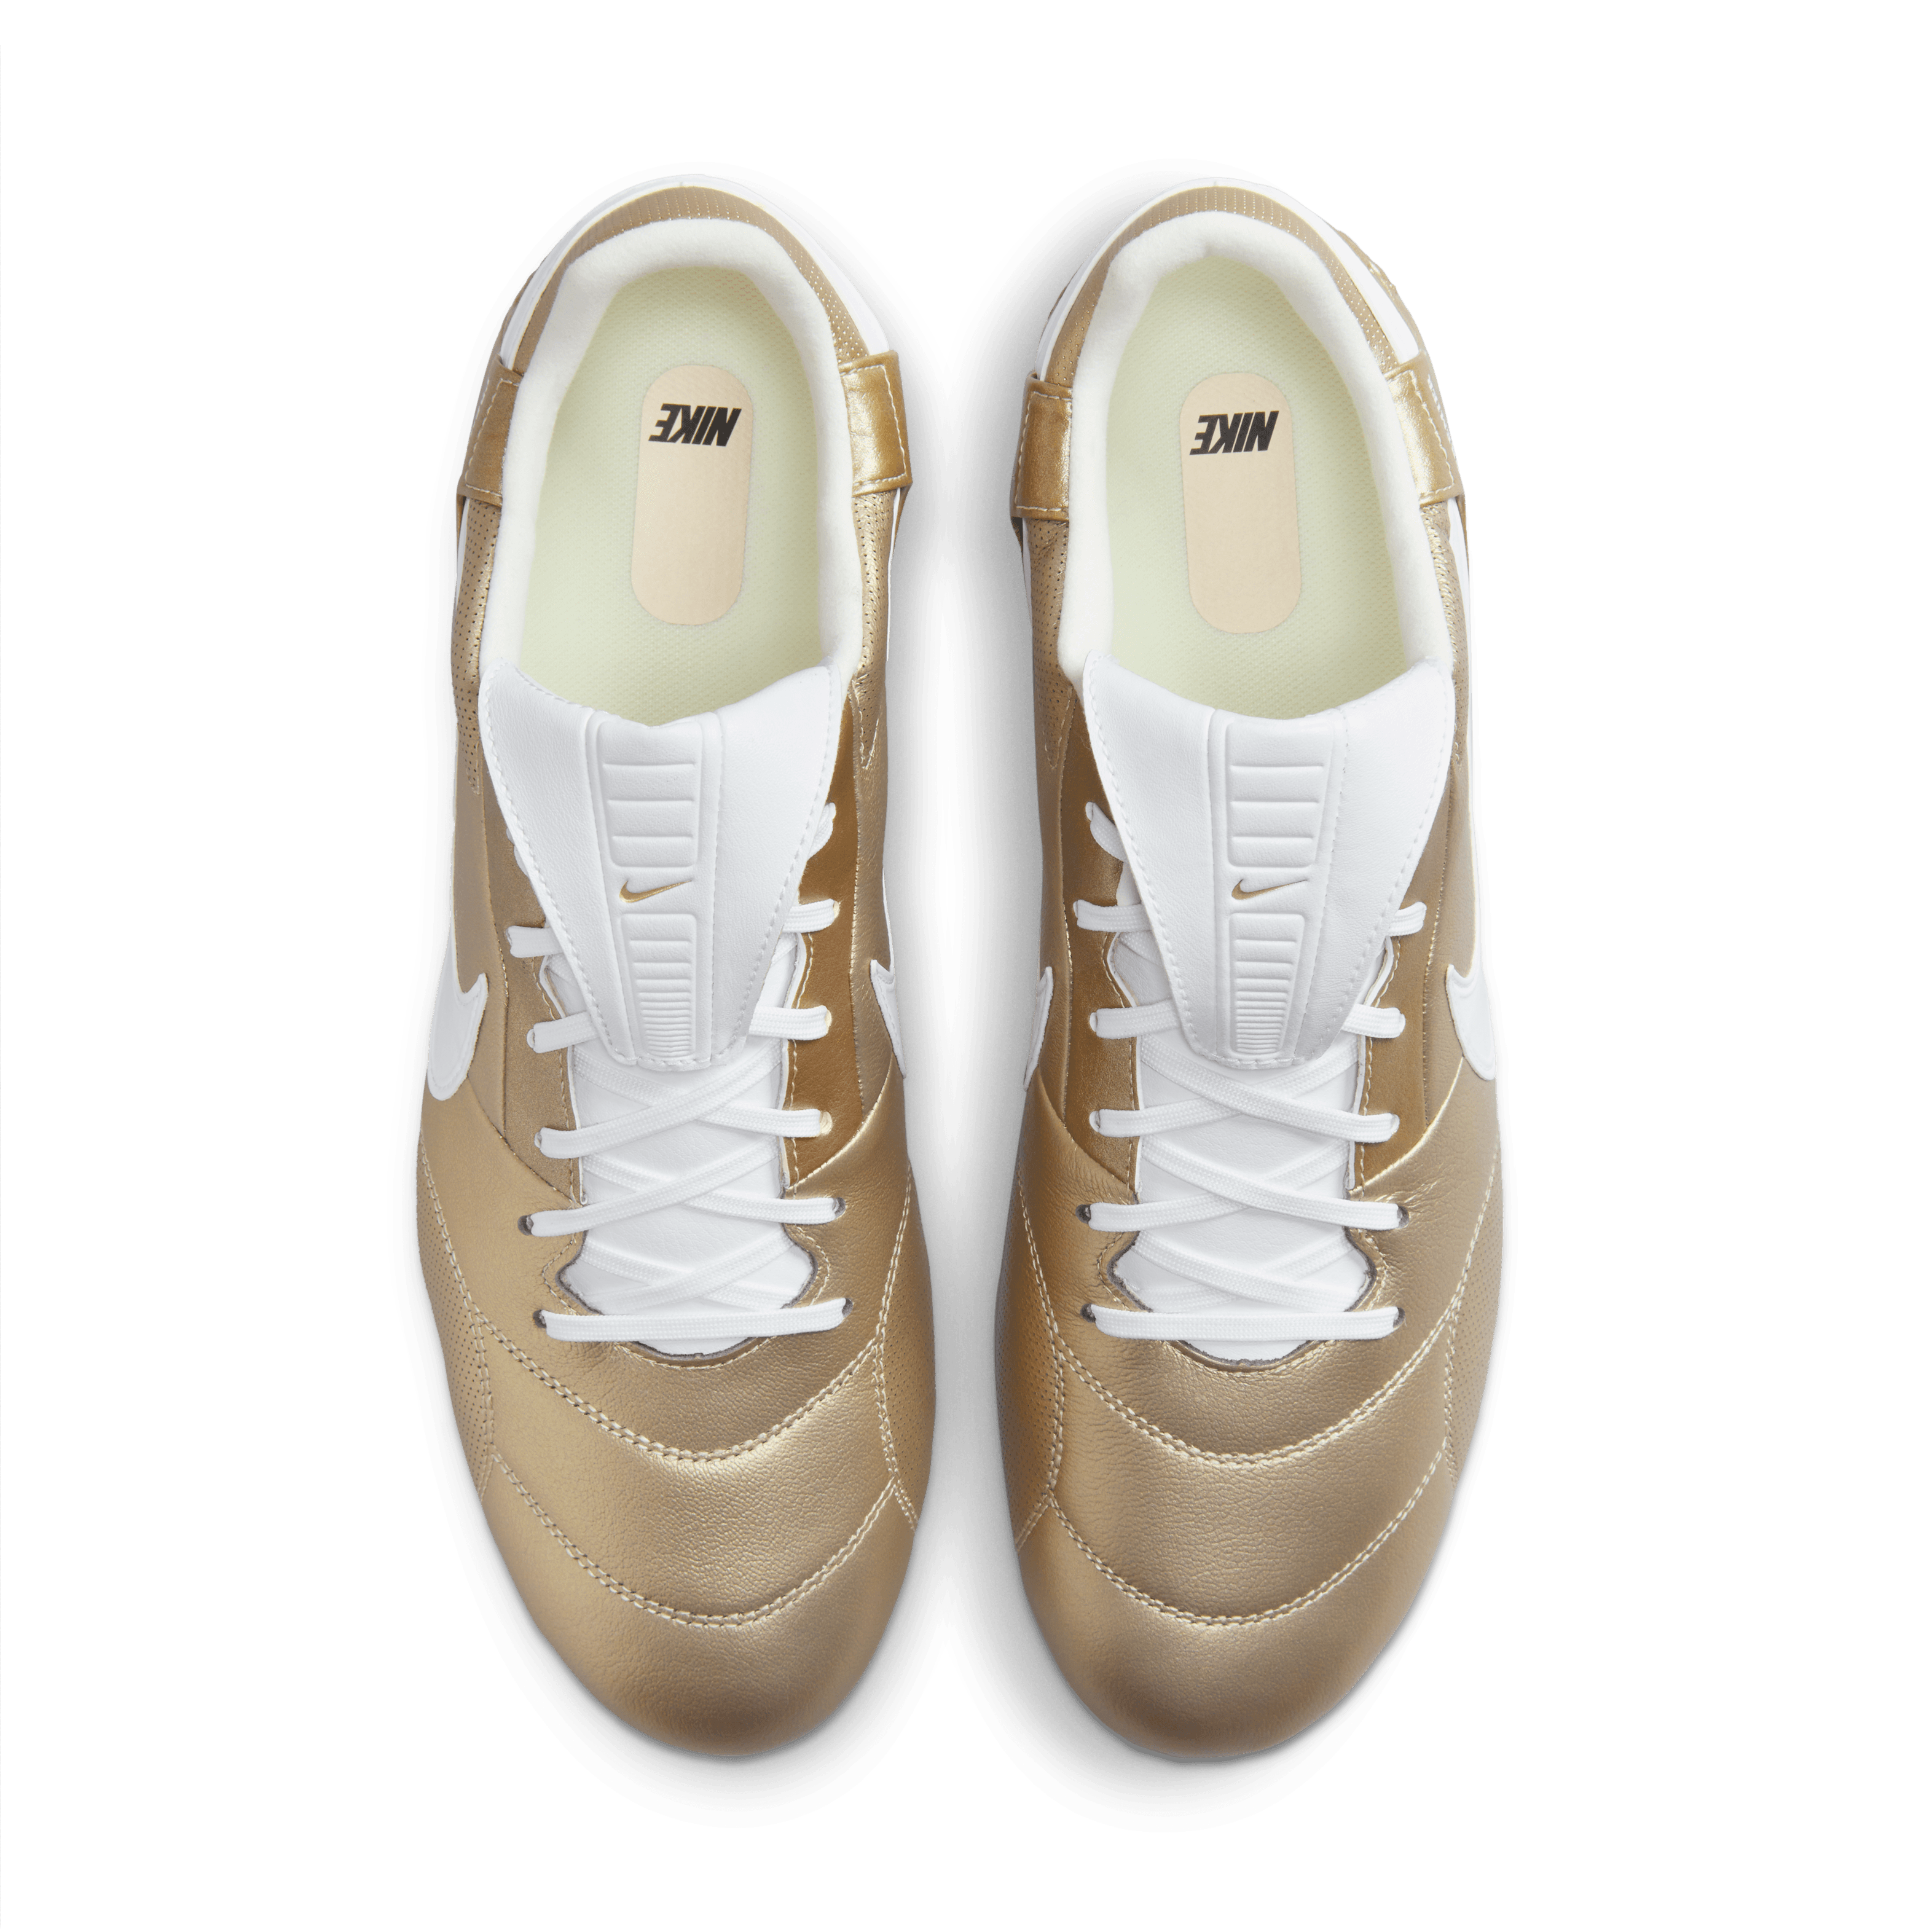 Nike Premier 3 FG-Mtlc Gold Grain/White-Mtlc Gold Grain